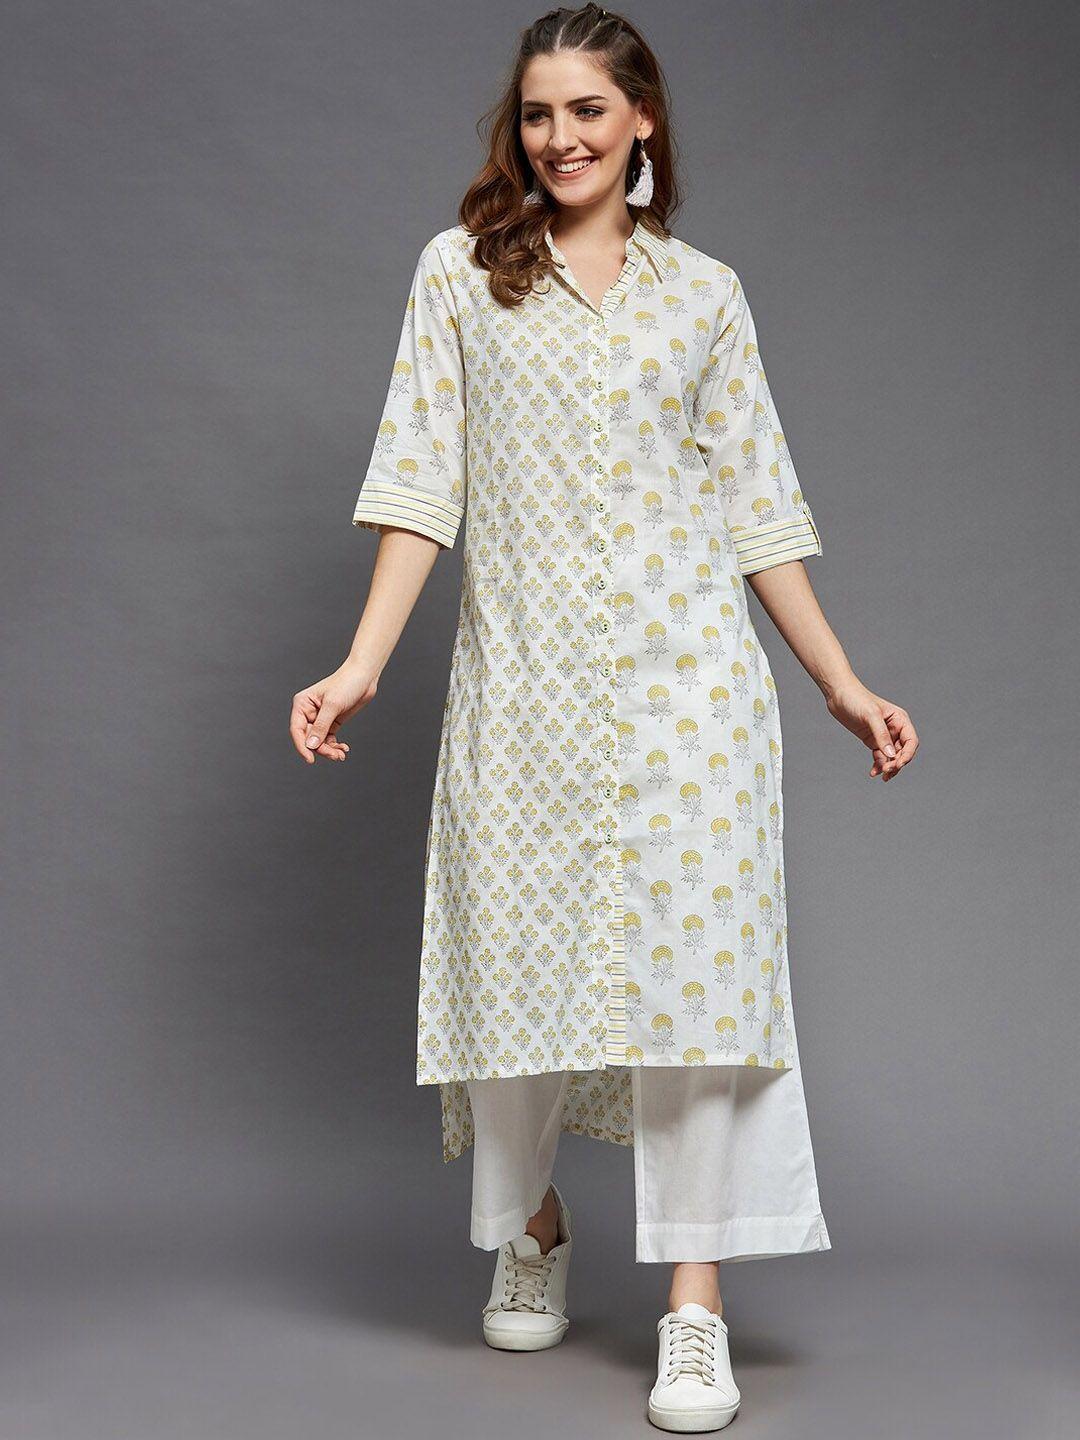 indian dobby women white & yellow floral printed flared sleeves block print pakistani style kurta